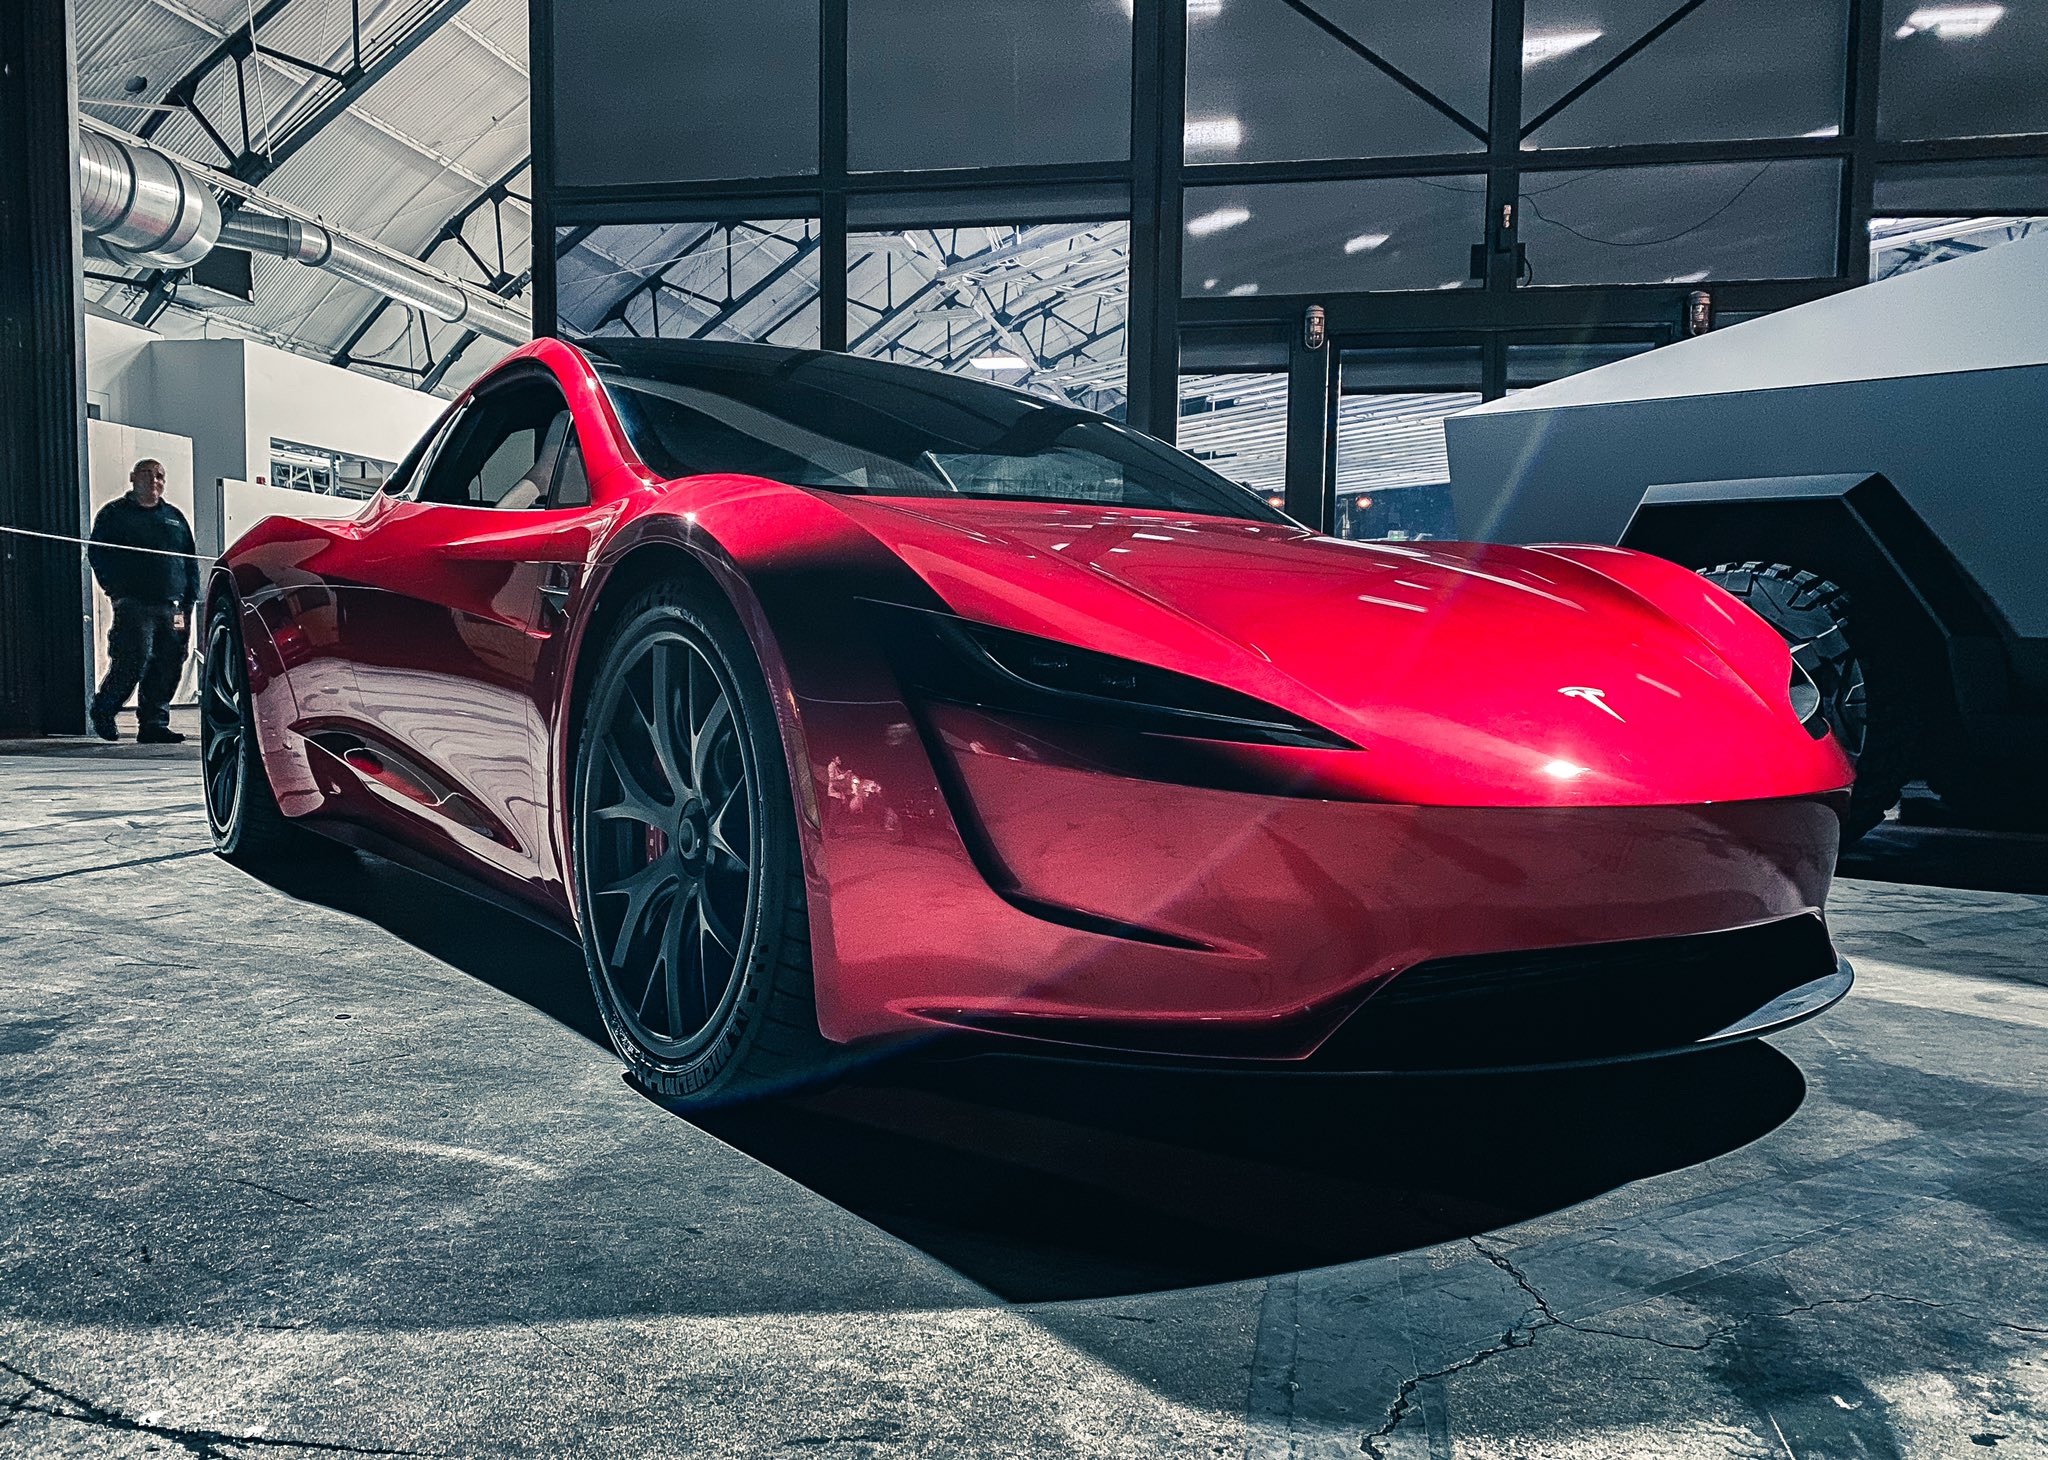 Next-gen Tesla Roadster and Cybertruck at Hawthorne Design Center, 2019 Tesla Holiday Party (Credit: giftedkick_/Instagram)